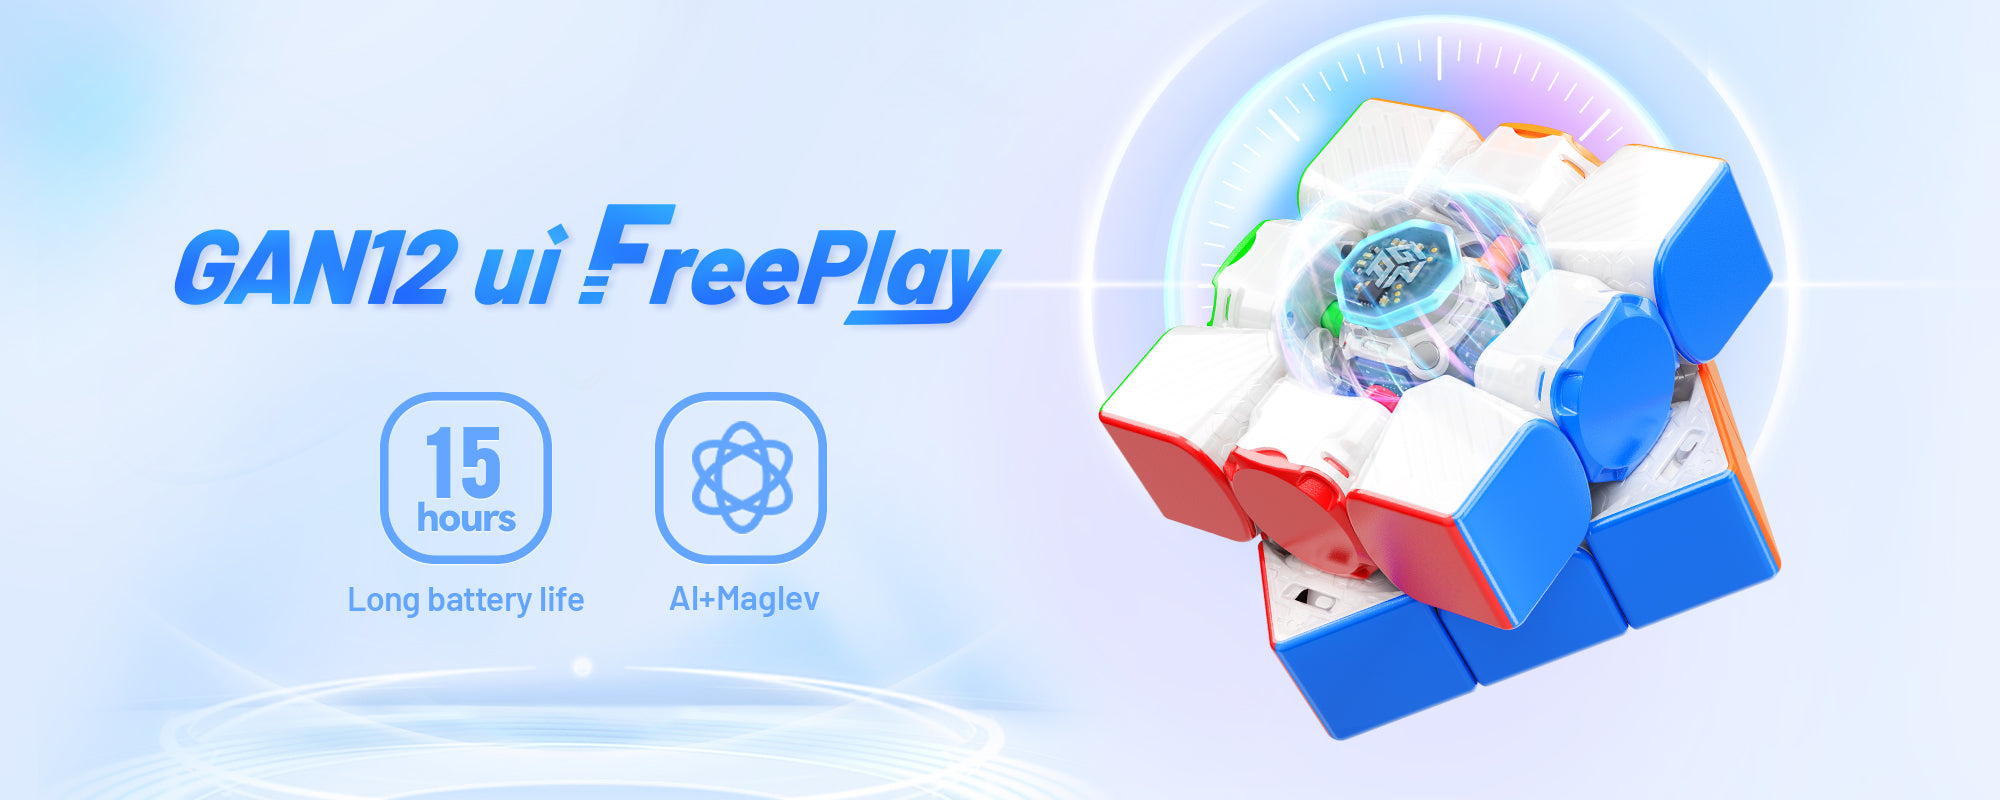 GAN 12 ui FreePlay Smart Cube